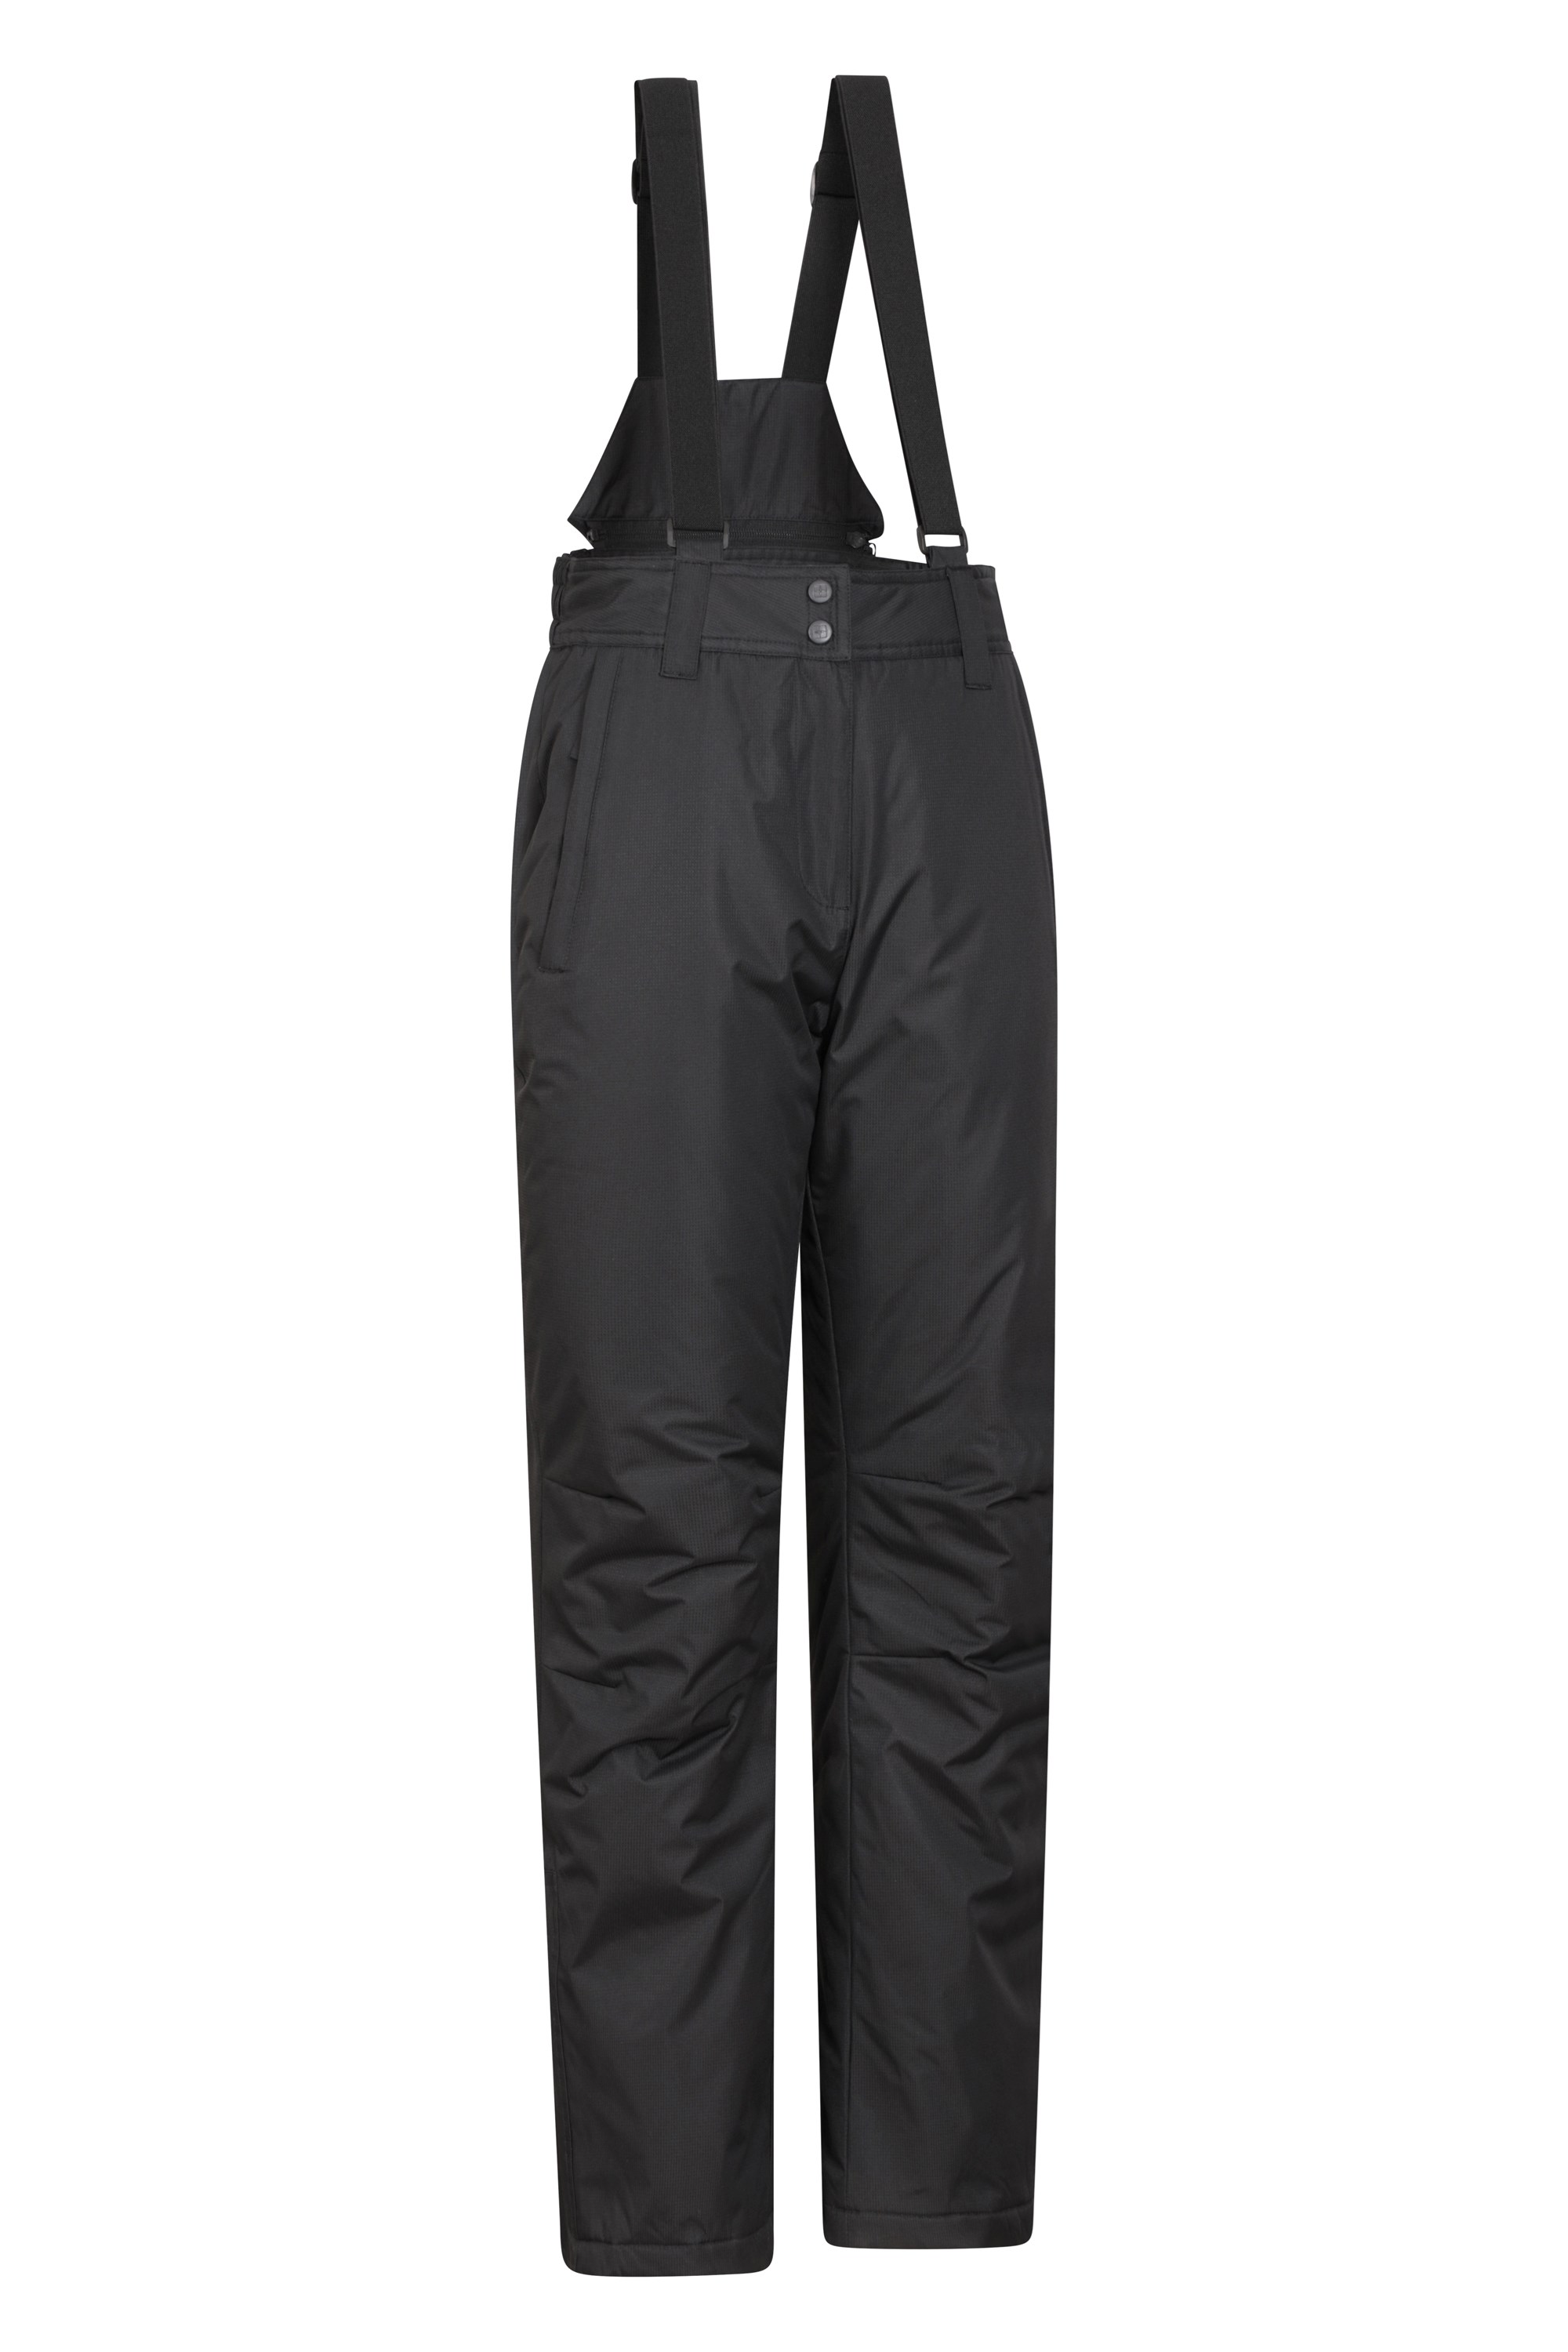 Mountain Warehouse Mountain Warehouse Womens New Black Light Outdoor Trousers Pants Size 20 Leg 31 